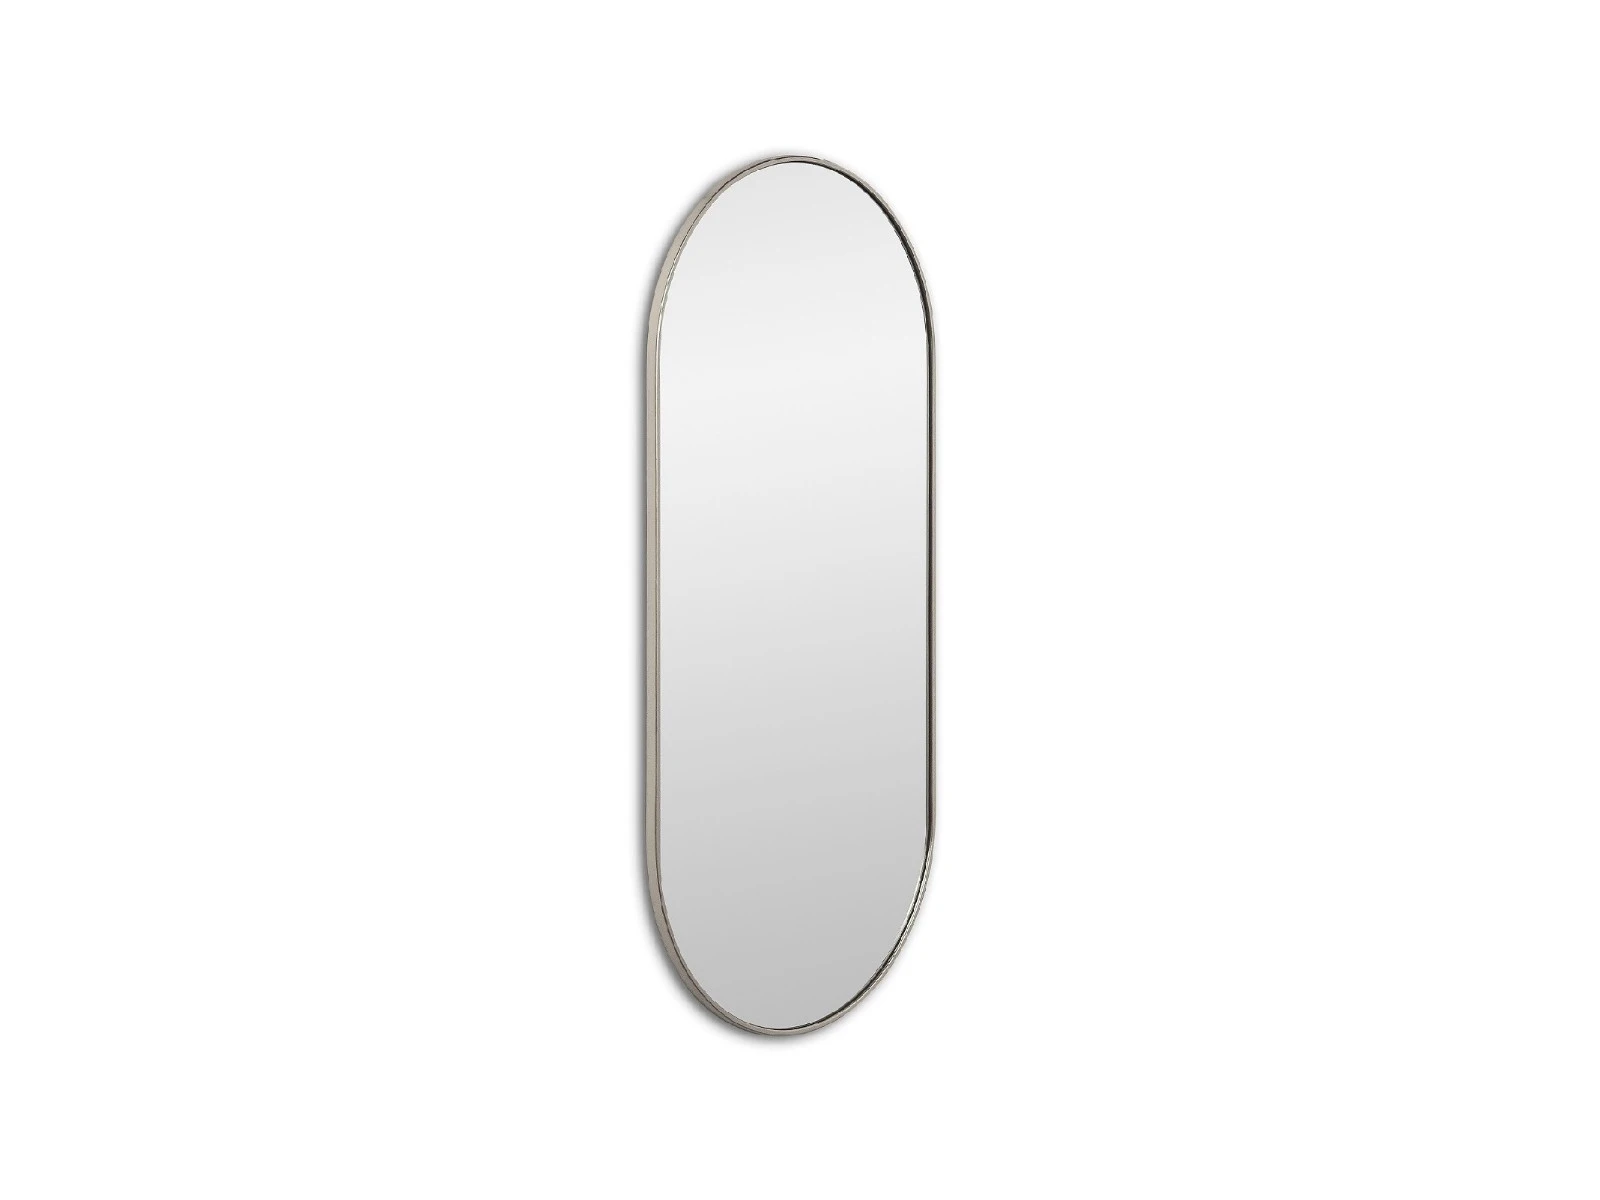 Овальное зеркало Kapsel S Silver 877434  - фото 2